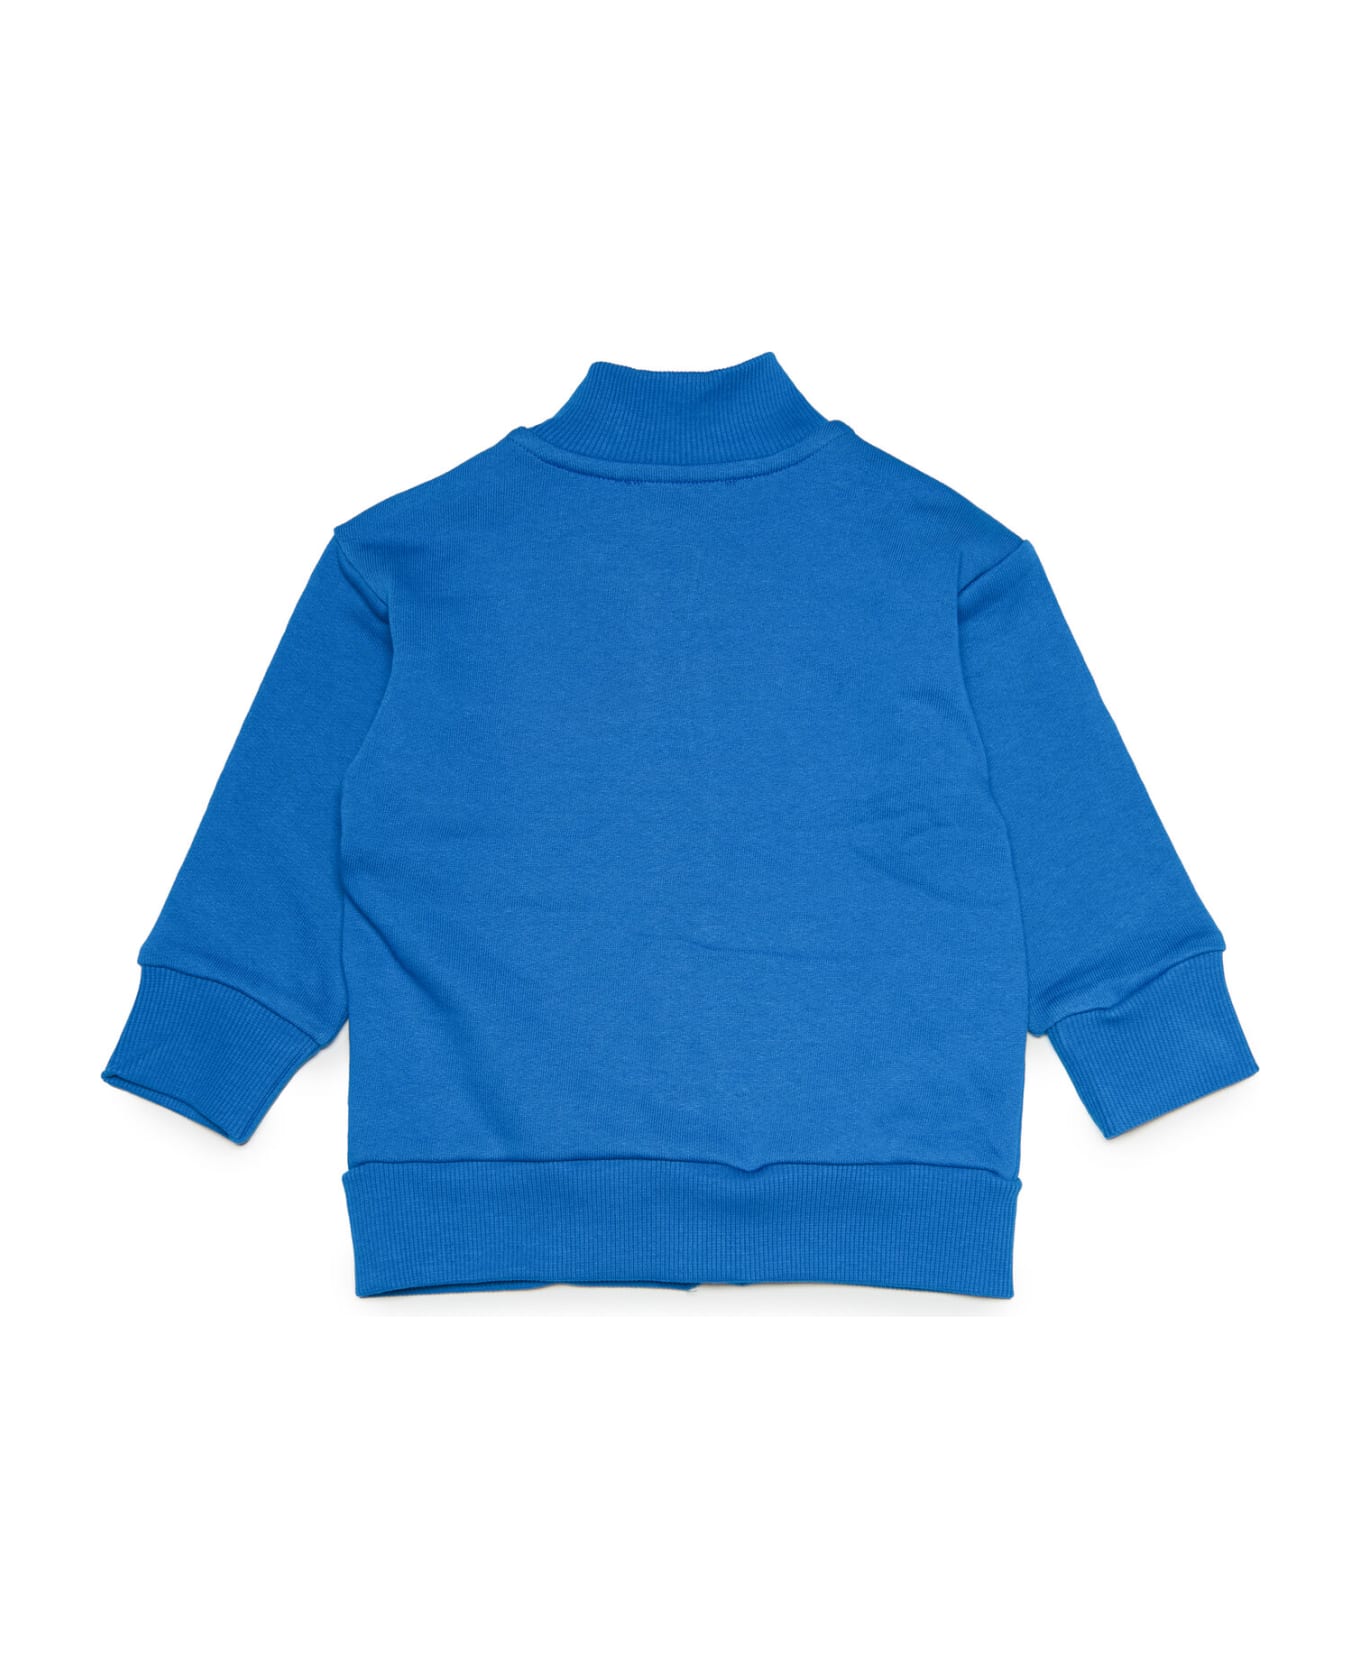 Diesel Sancyb Sweat-shirt Diesel Blue Cotton Sweatshirt With Zip And D Logo - Princess blue